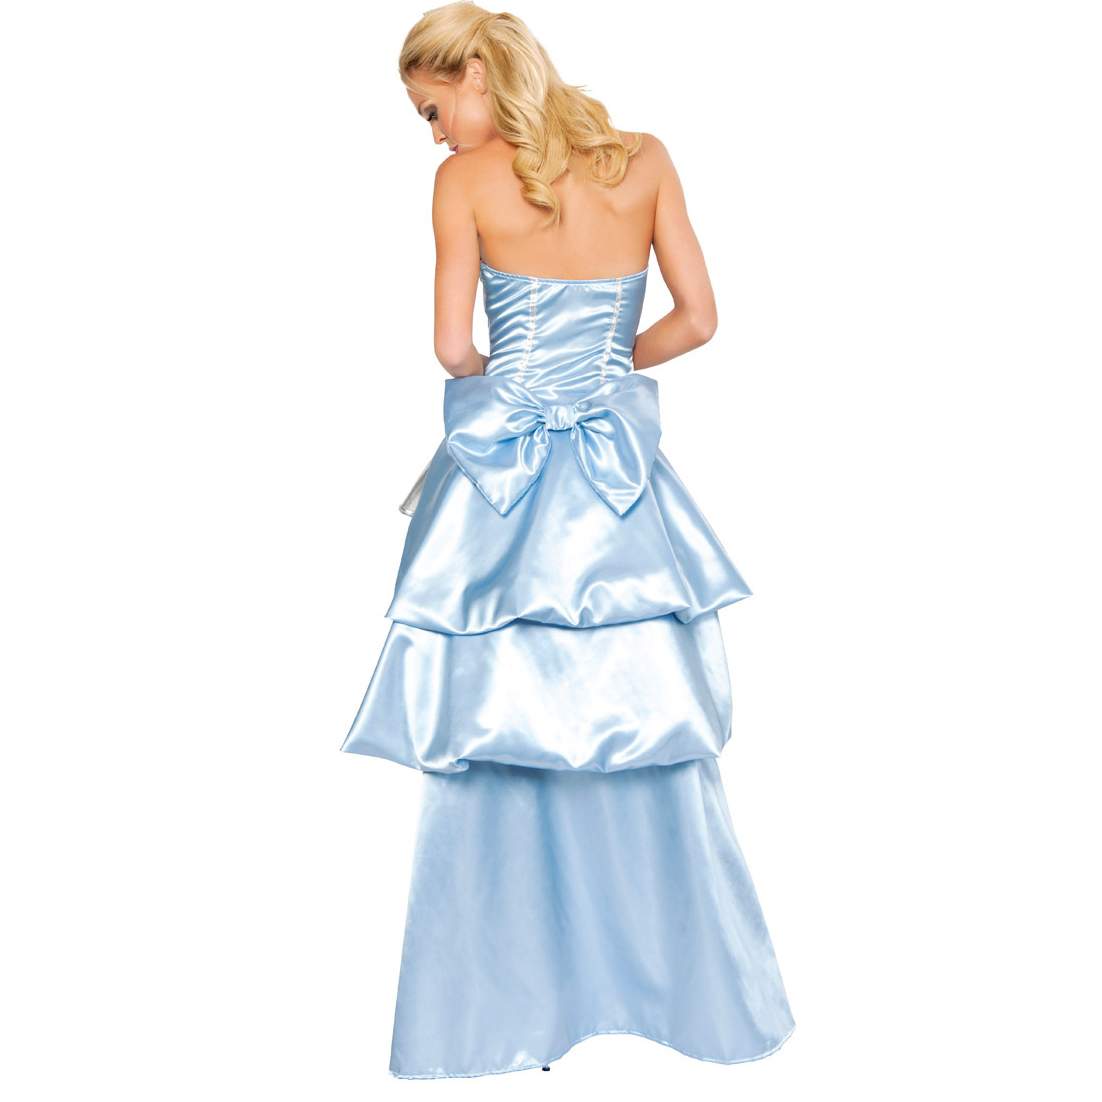 Women's Deluxe Light Blue Midnight Princess Dress Cosplay Costume N4002